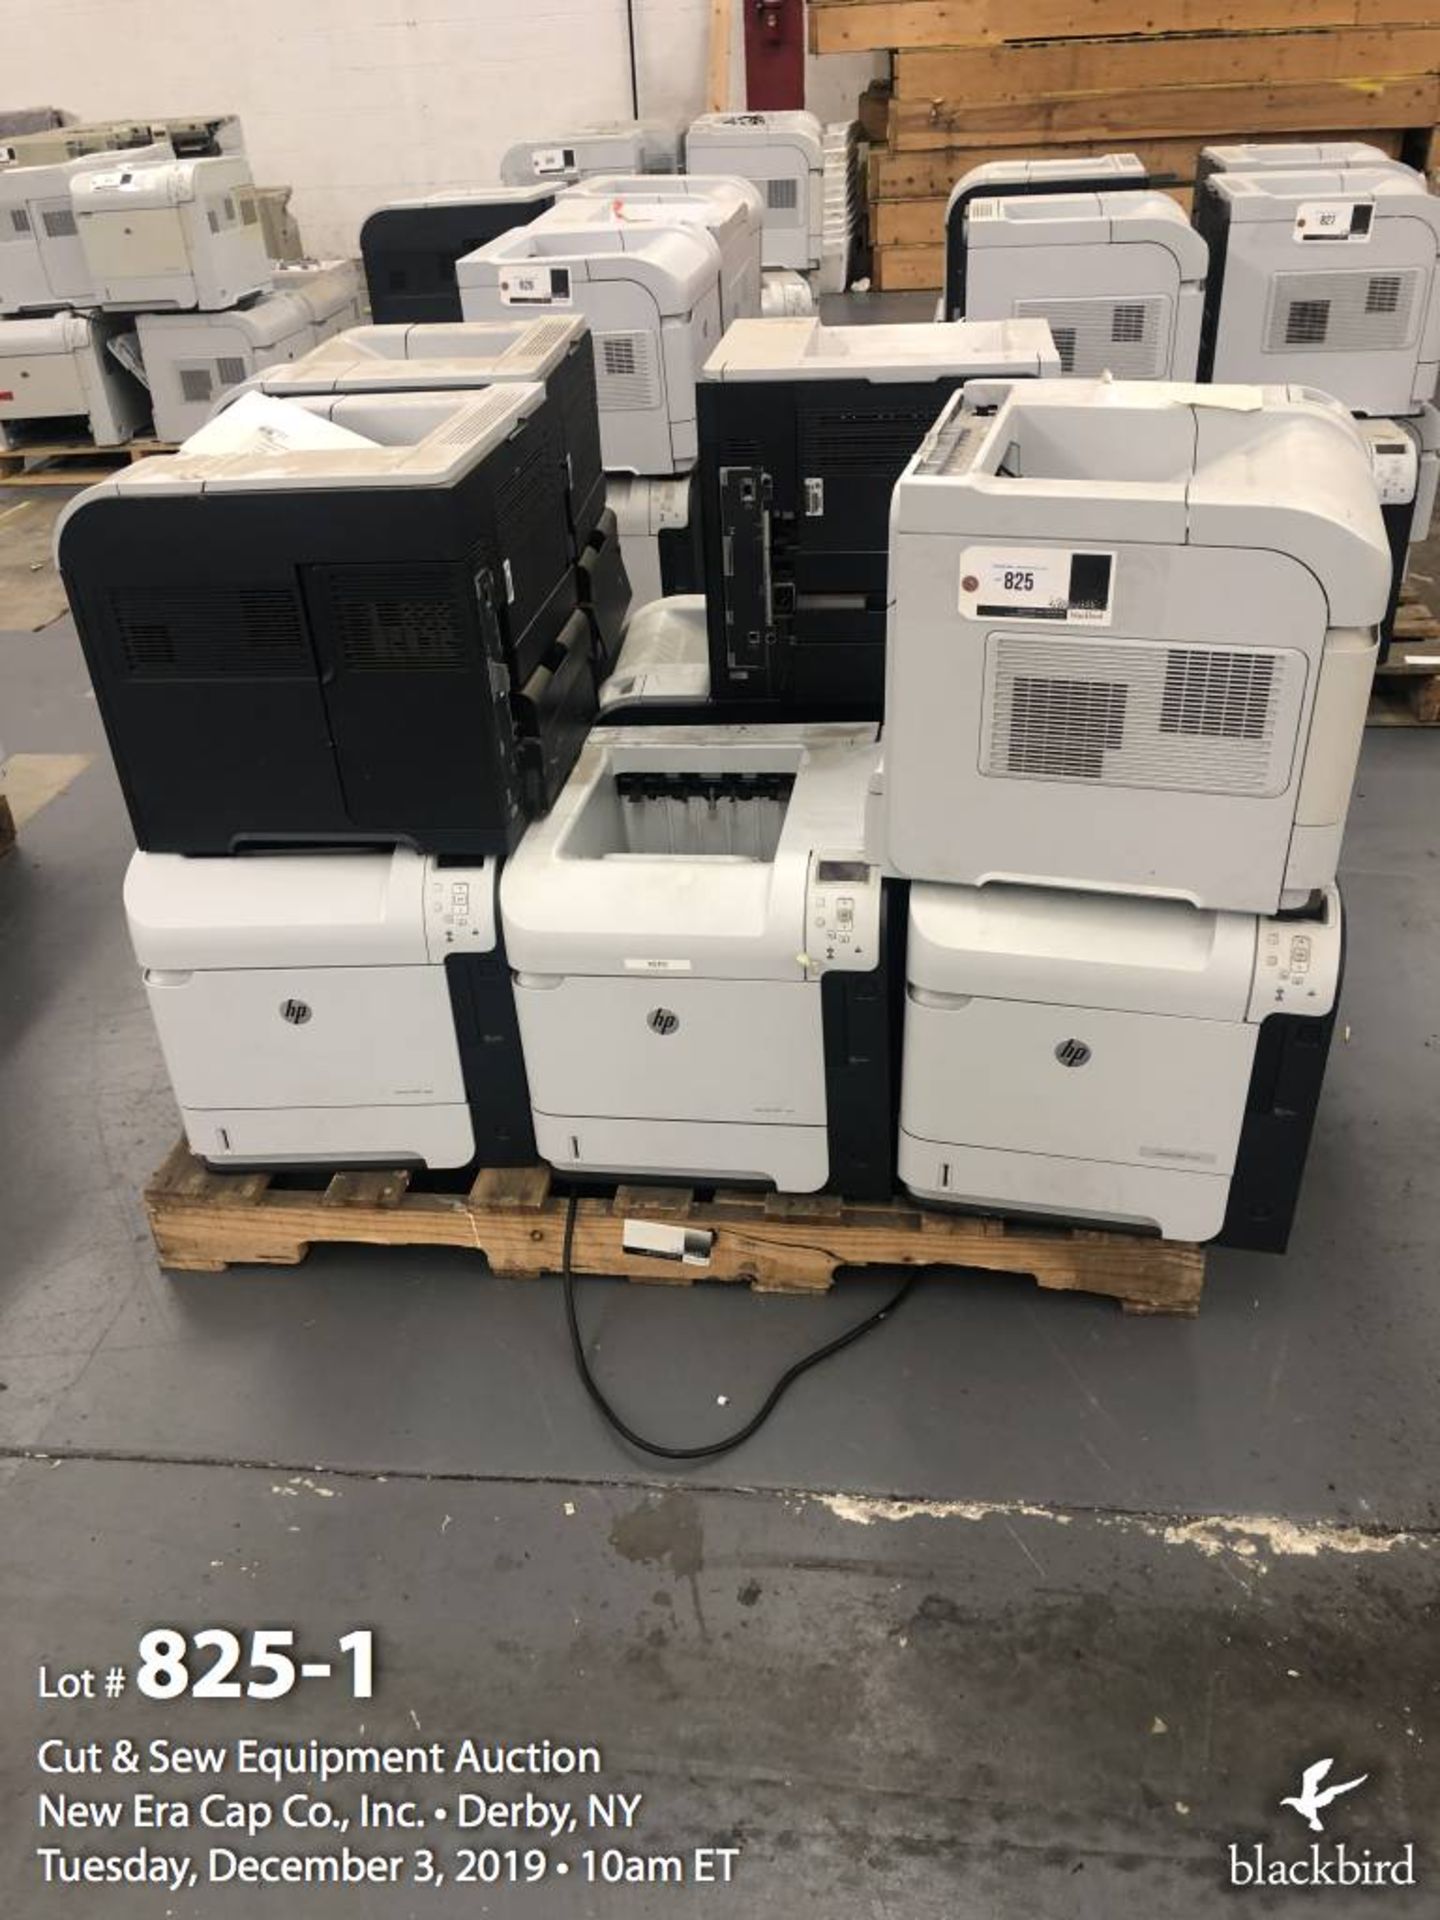 (10) HP LaserJet M601 printers, sold per unit 10x the money